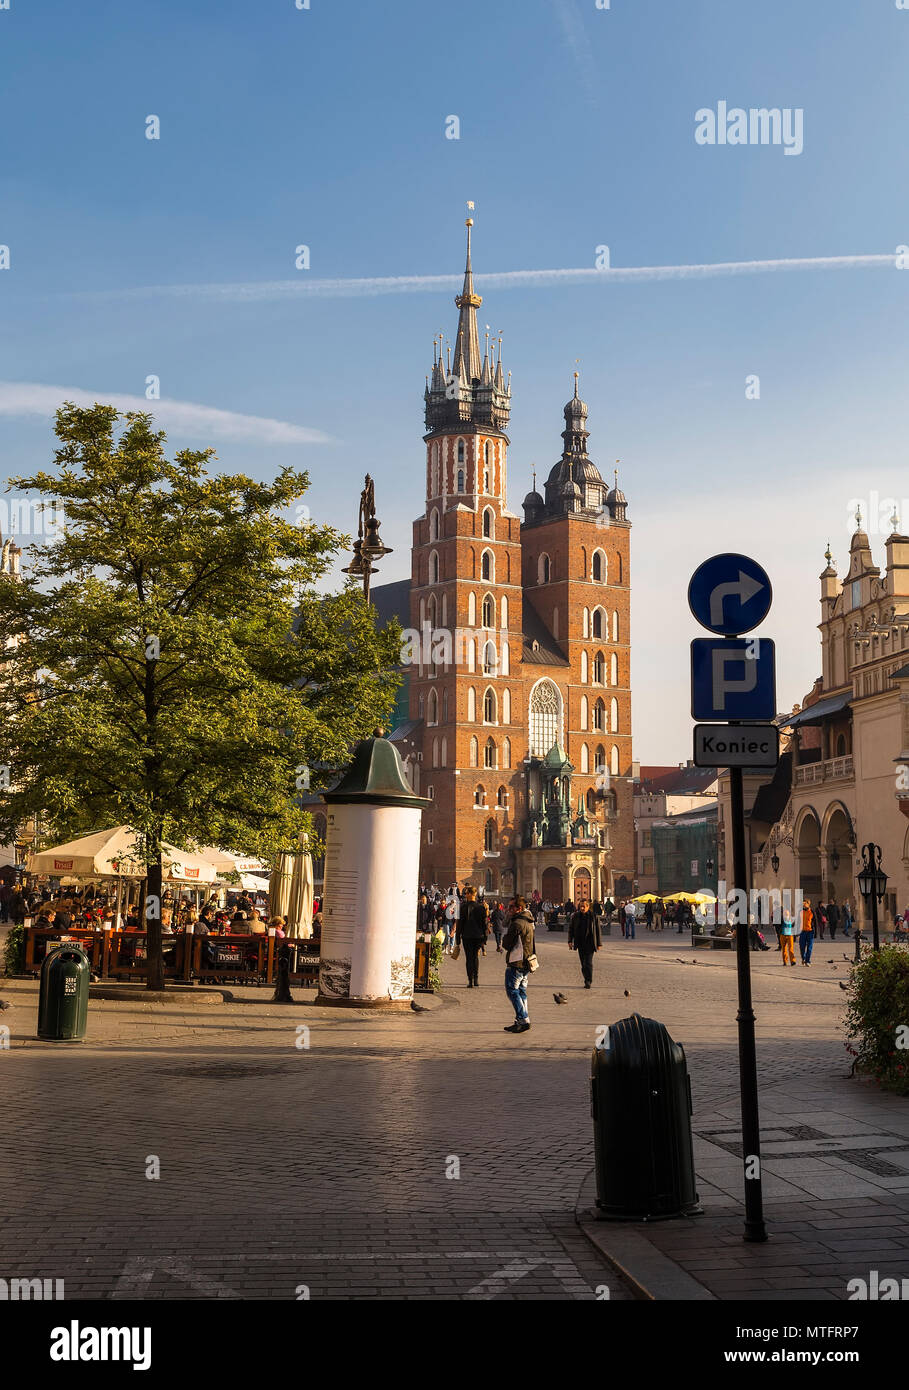 Krakau, Polen - 30. Oktober: Marktplatz und St. Mary's Church in Krakau am 30. Oktober 2015. Polen Stockfoto